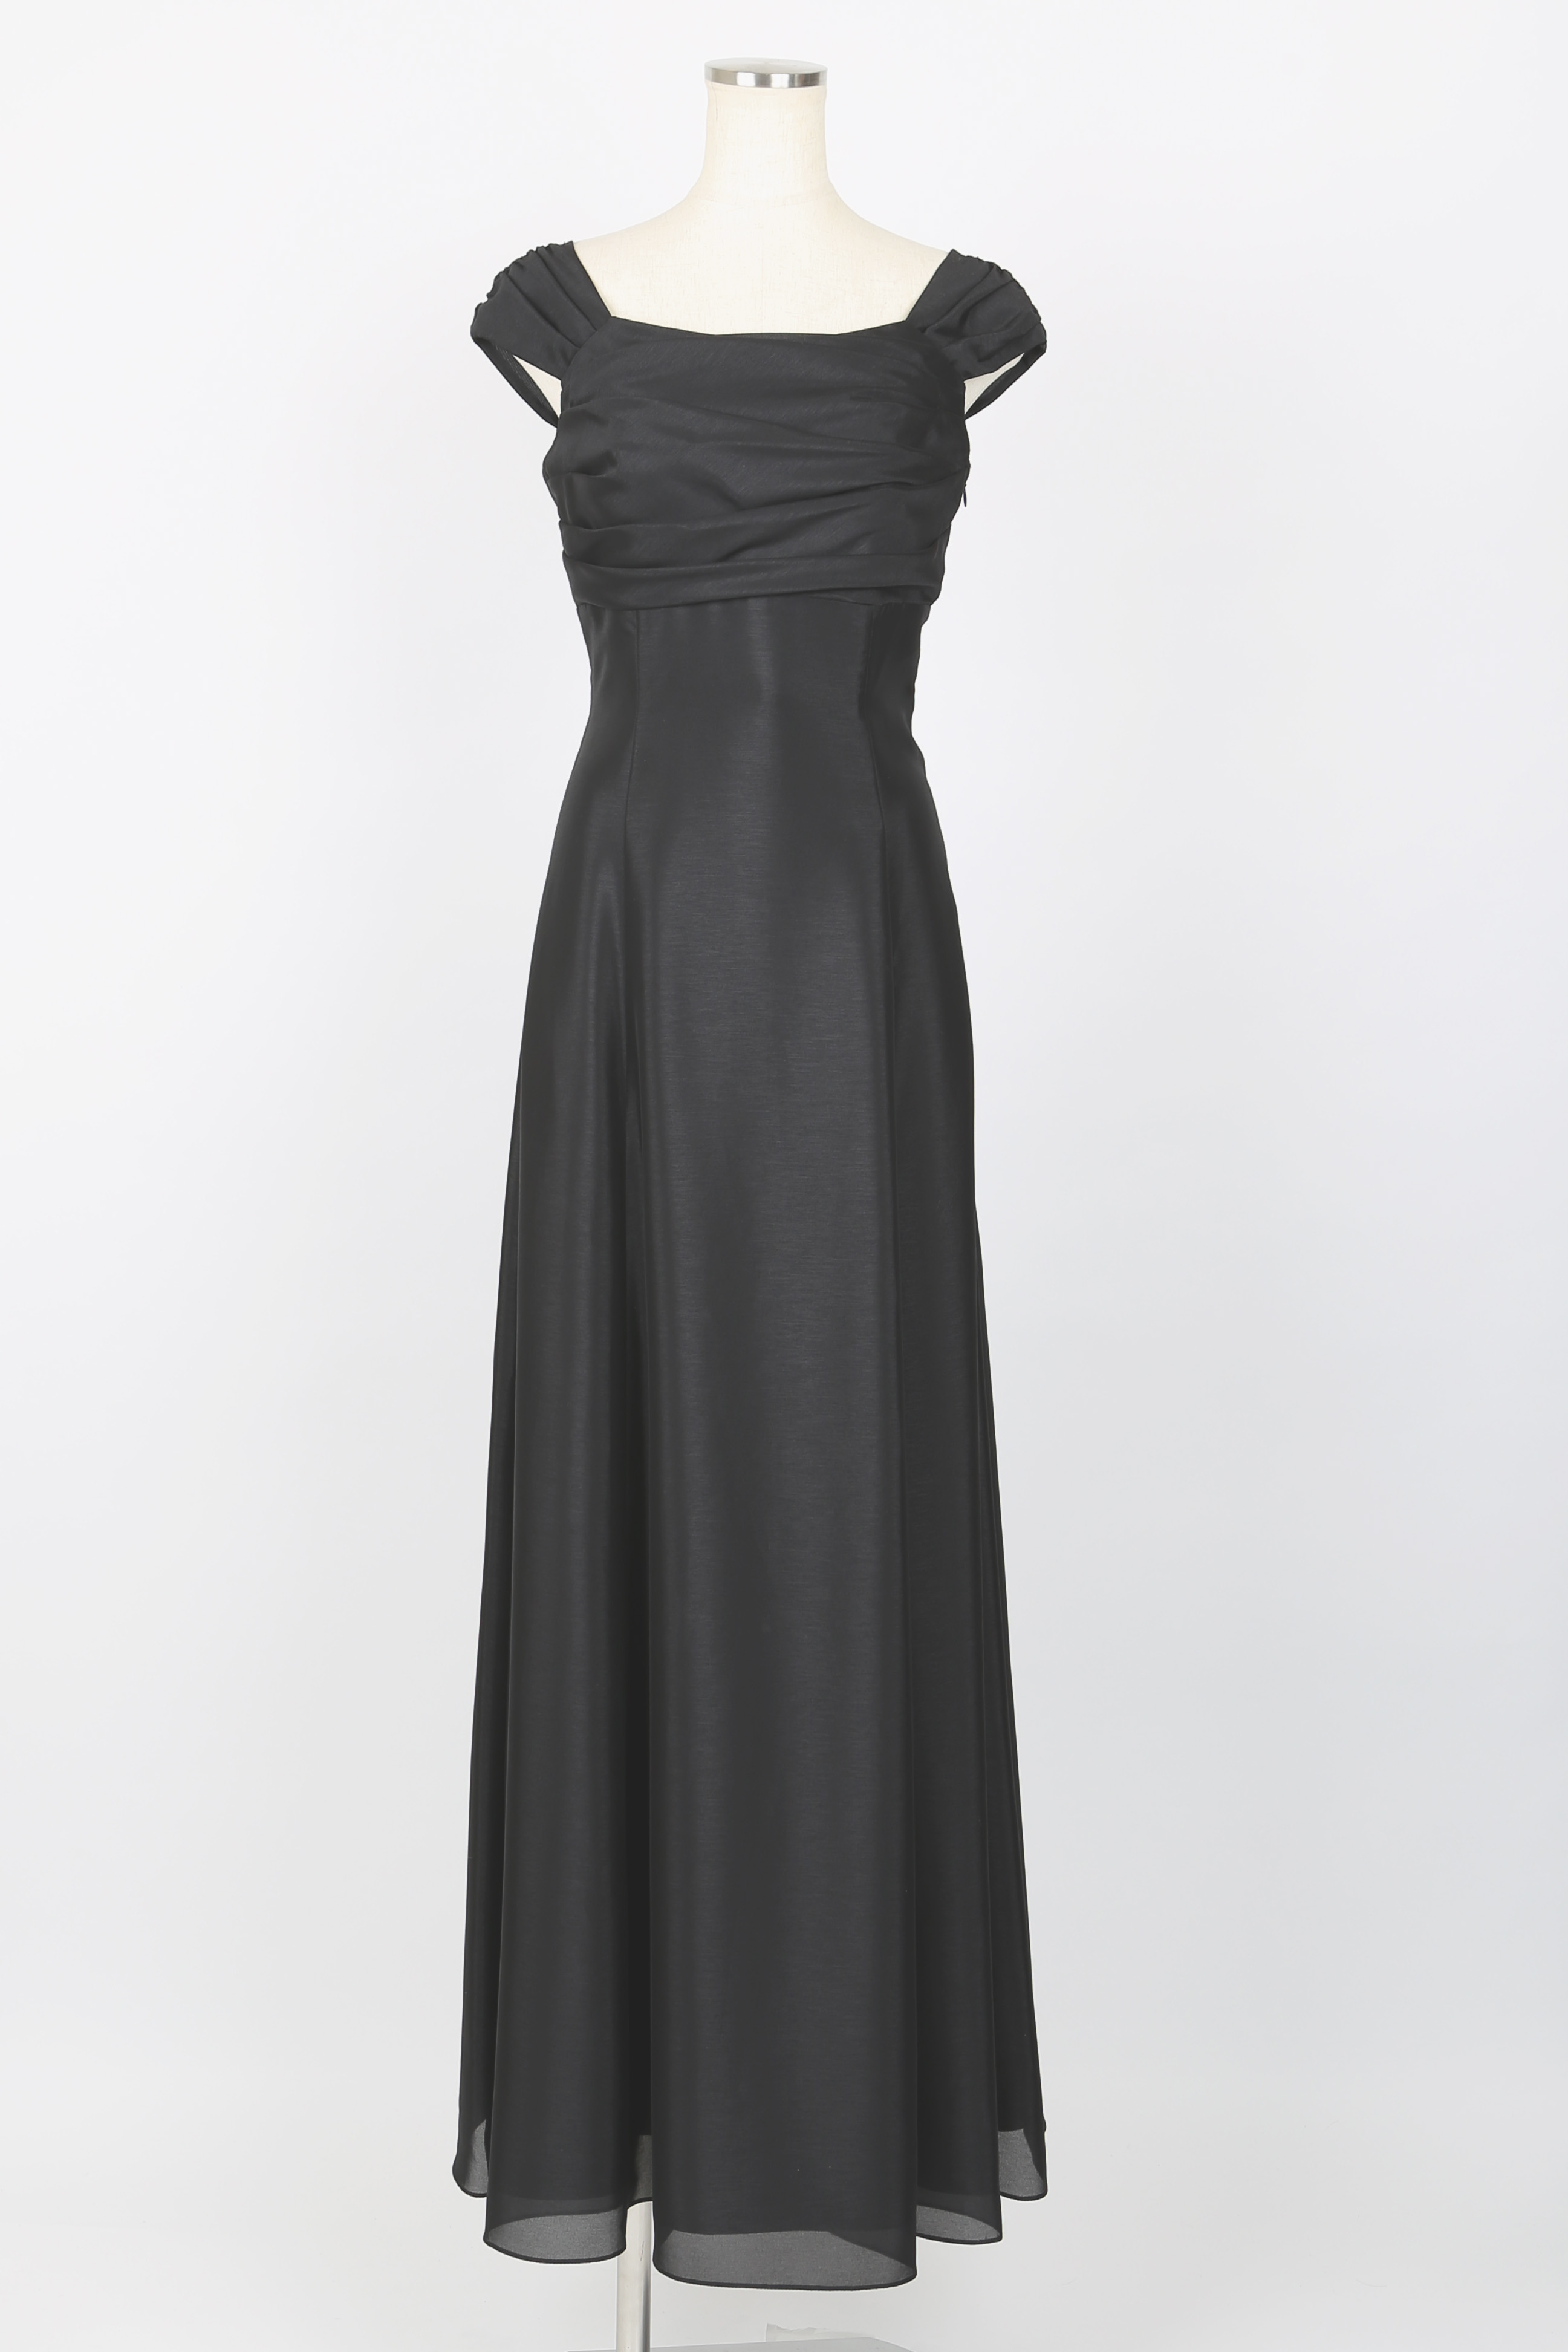 PREFERENCE PARTY’Sのブラックマキシ丈ドレス – 銀座のレンタルドレス サロン、シェアリーコーデ